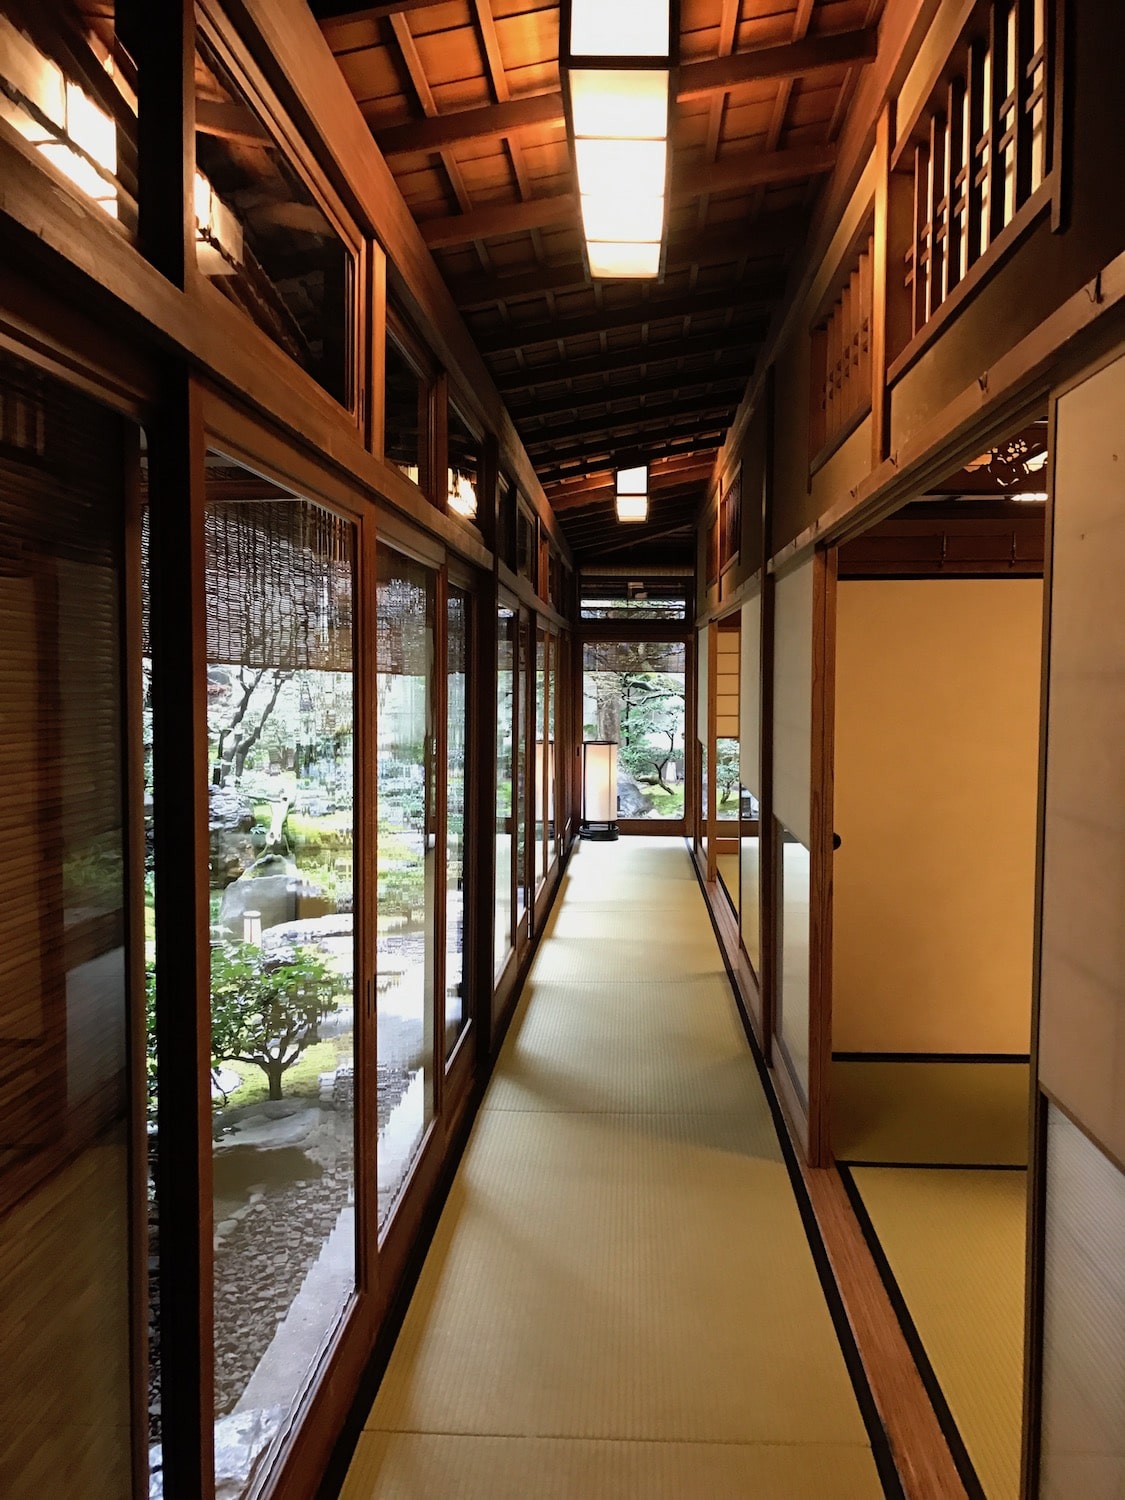 Couloir du ryokan de Kyoto.